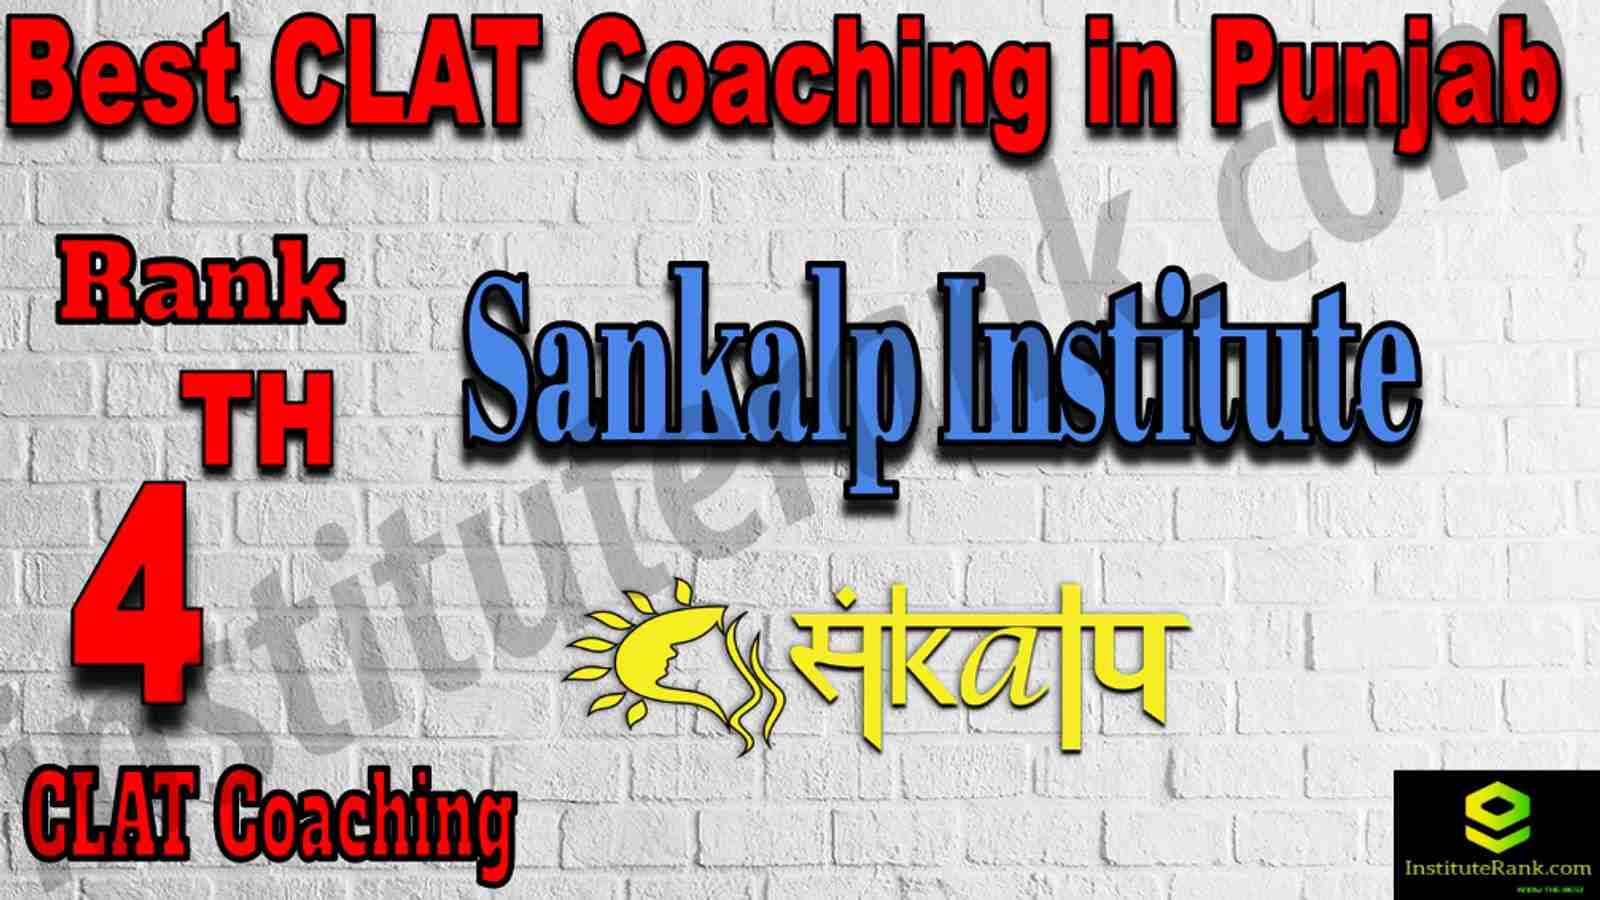 4th Best Clat Coaching in Punjab